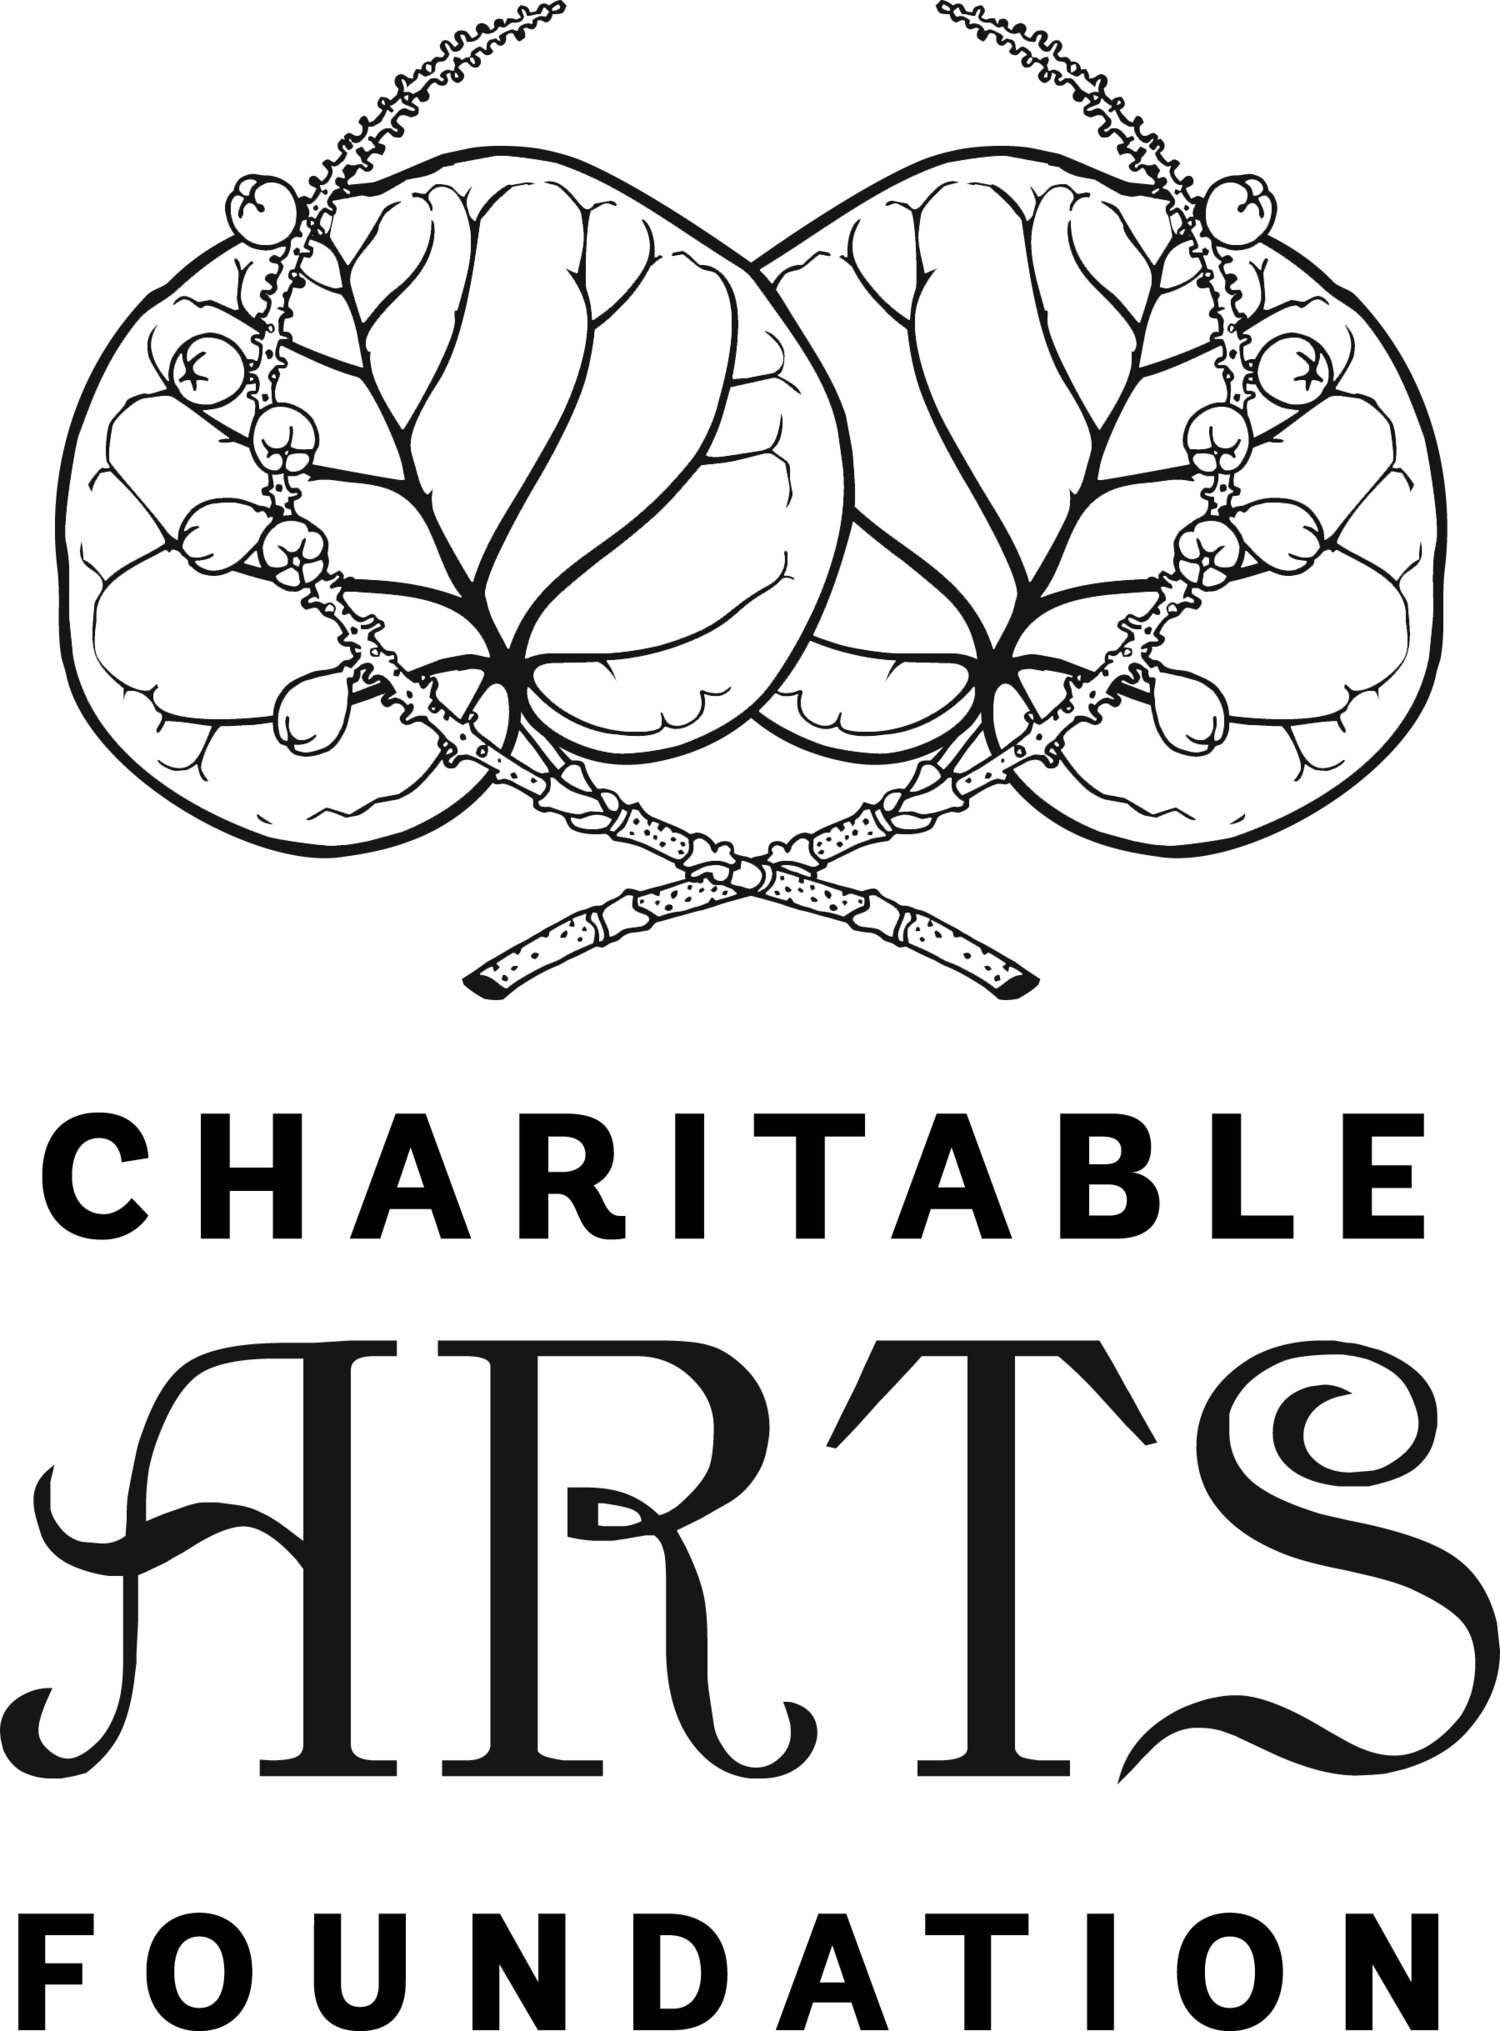 The Charitable Arts Foundation